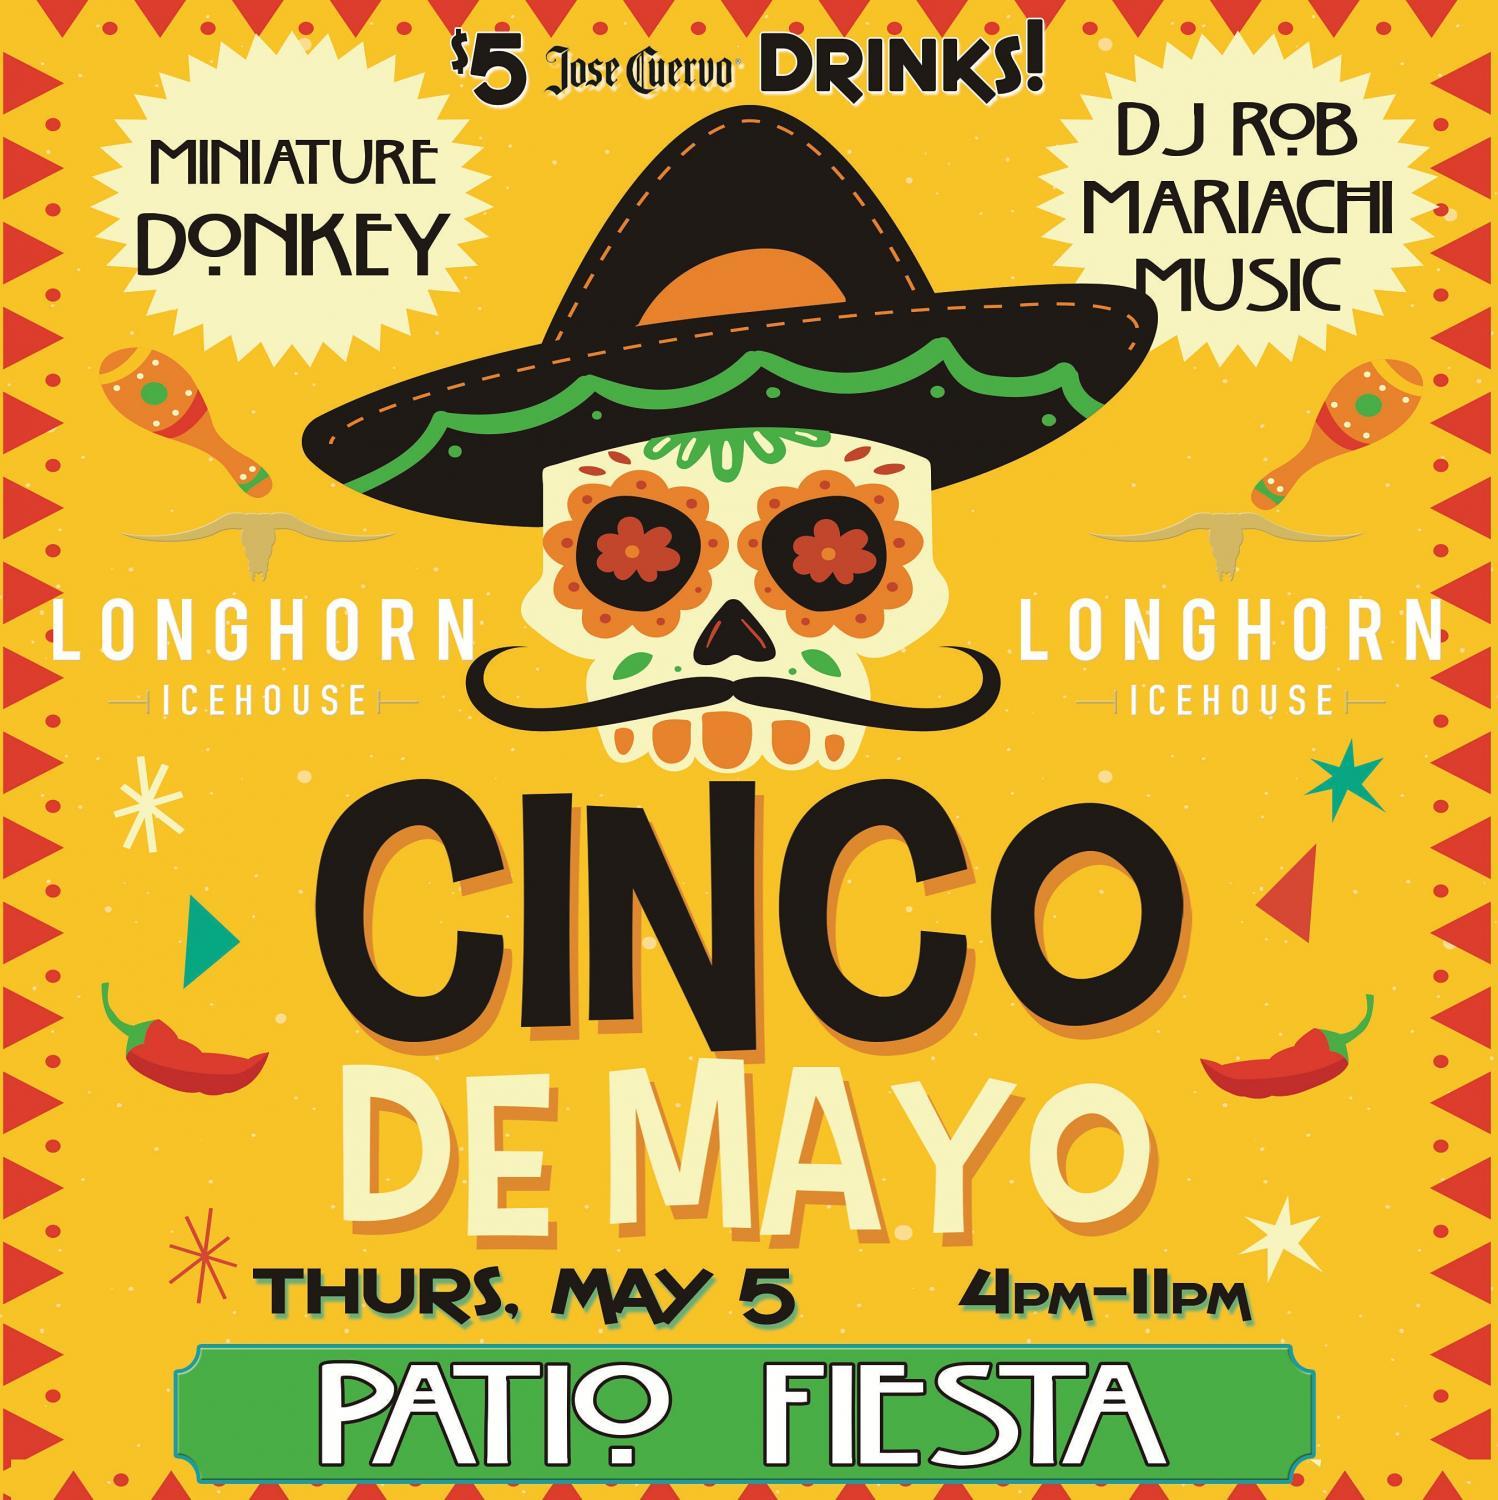 Cinco De Mayo Party! ? Miniature Donkey, DJ Rob, $5 Drinks, Mariachi Music